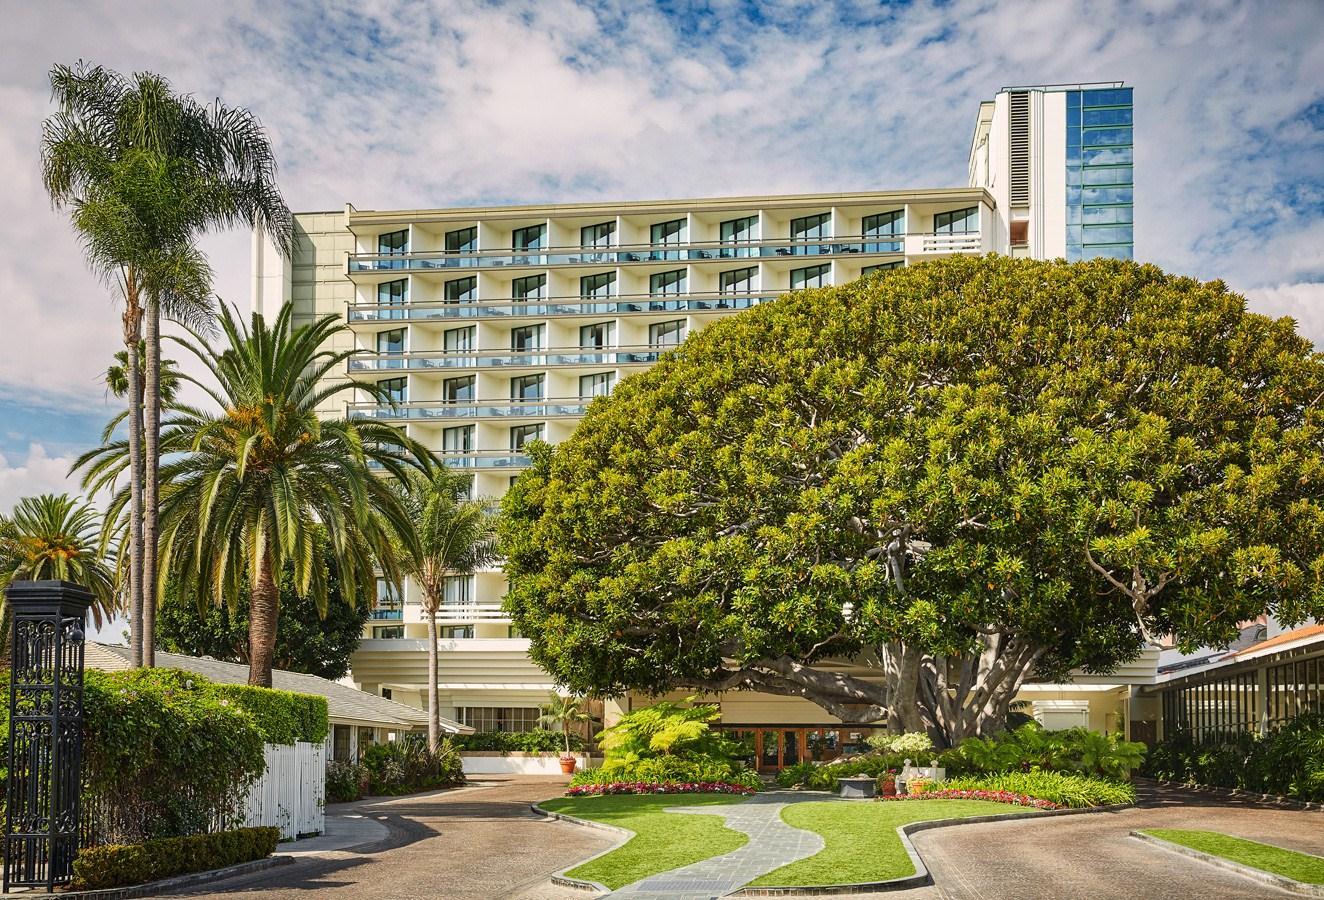 Fairmont Miramar Hotel & Bungalows in Santa Monica, CA